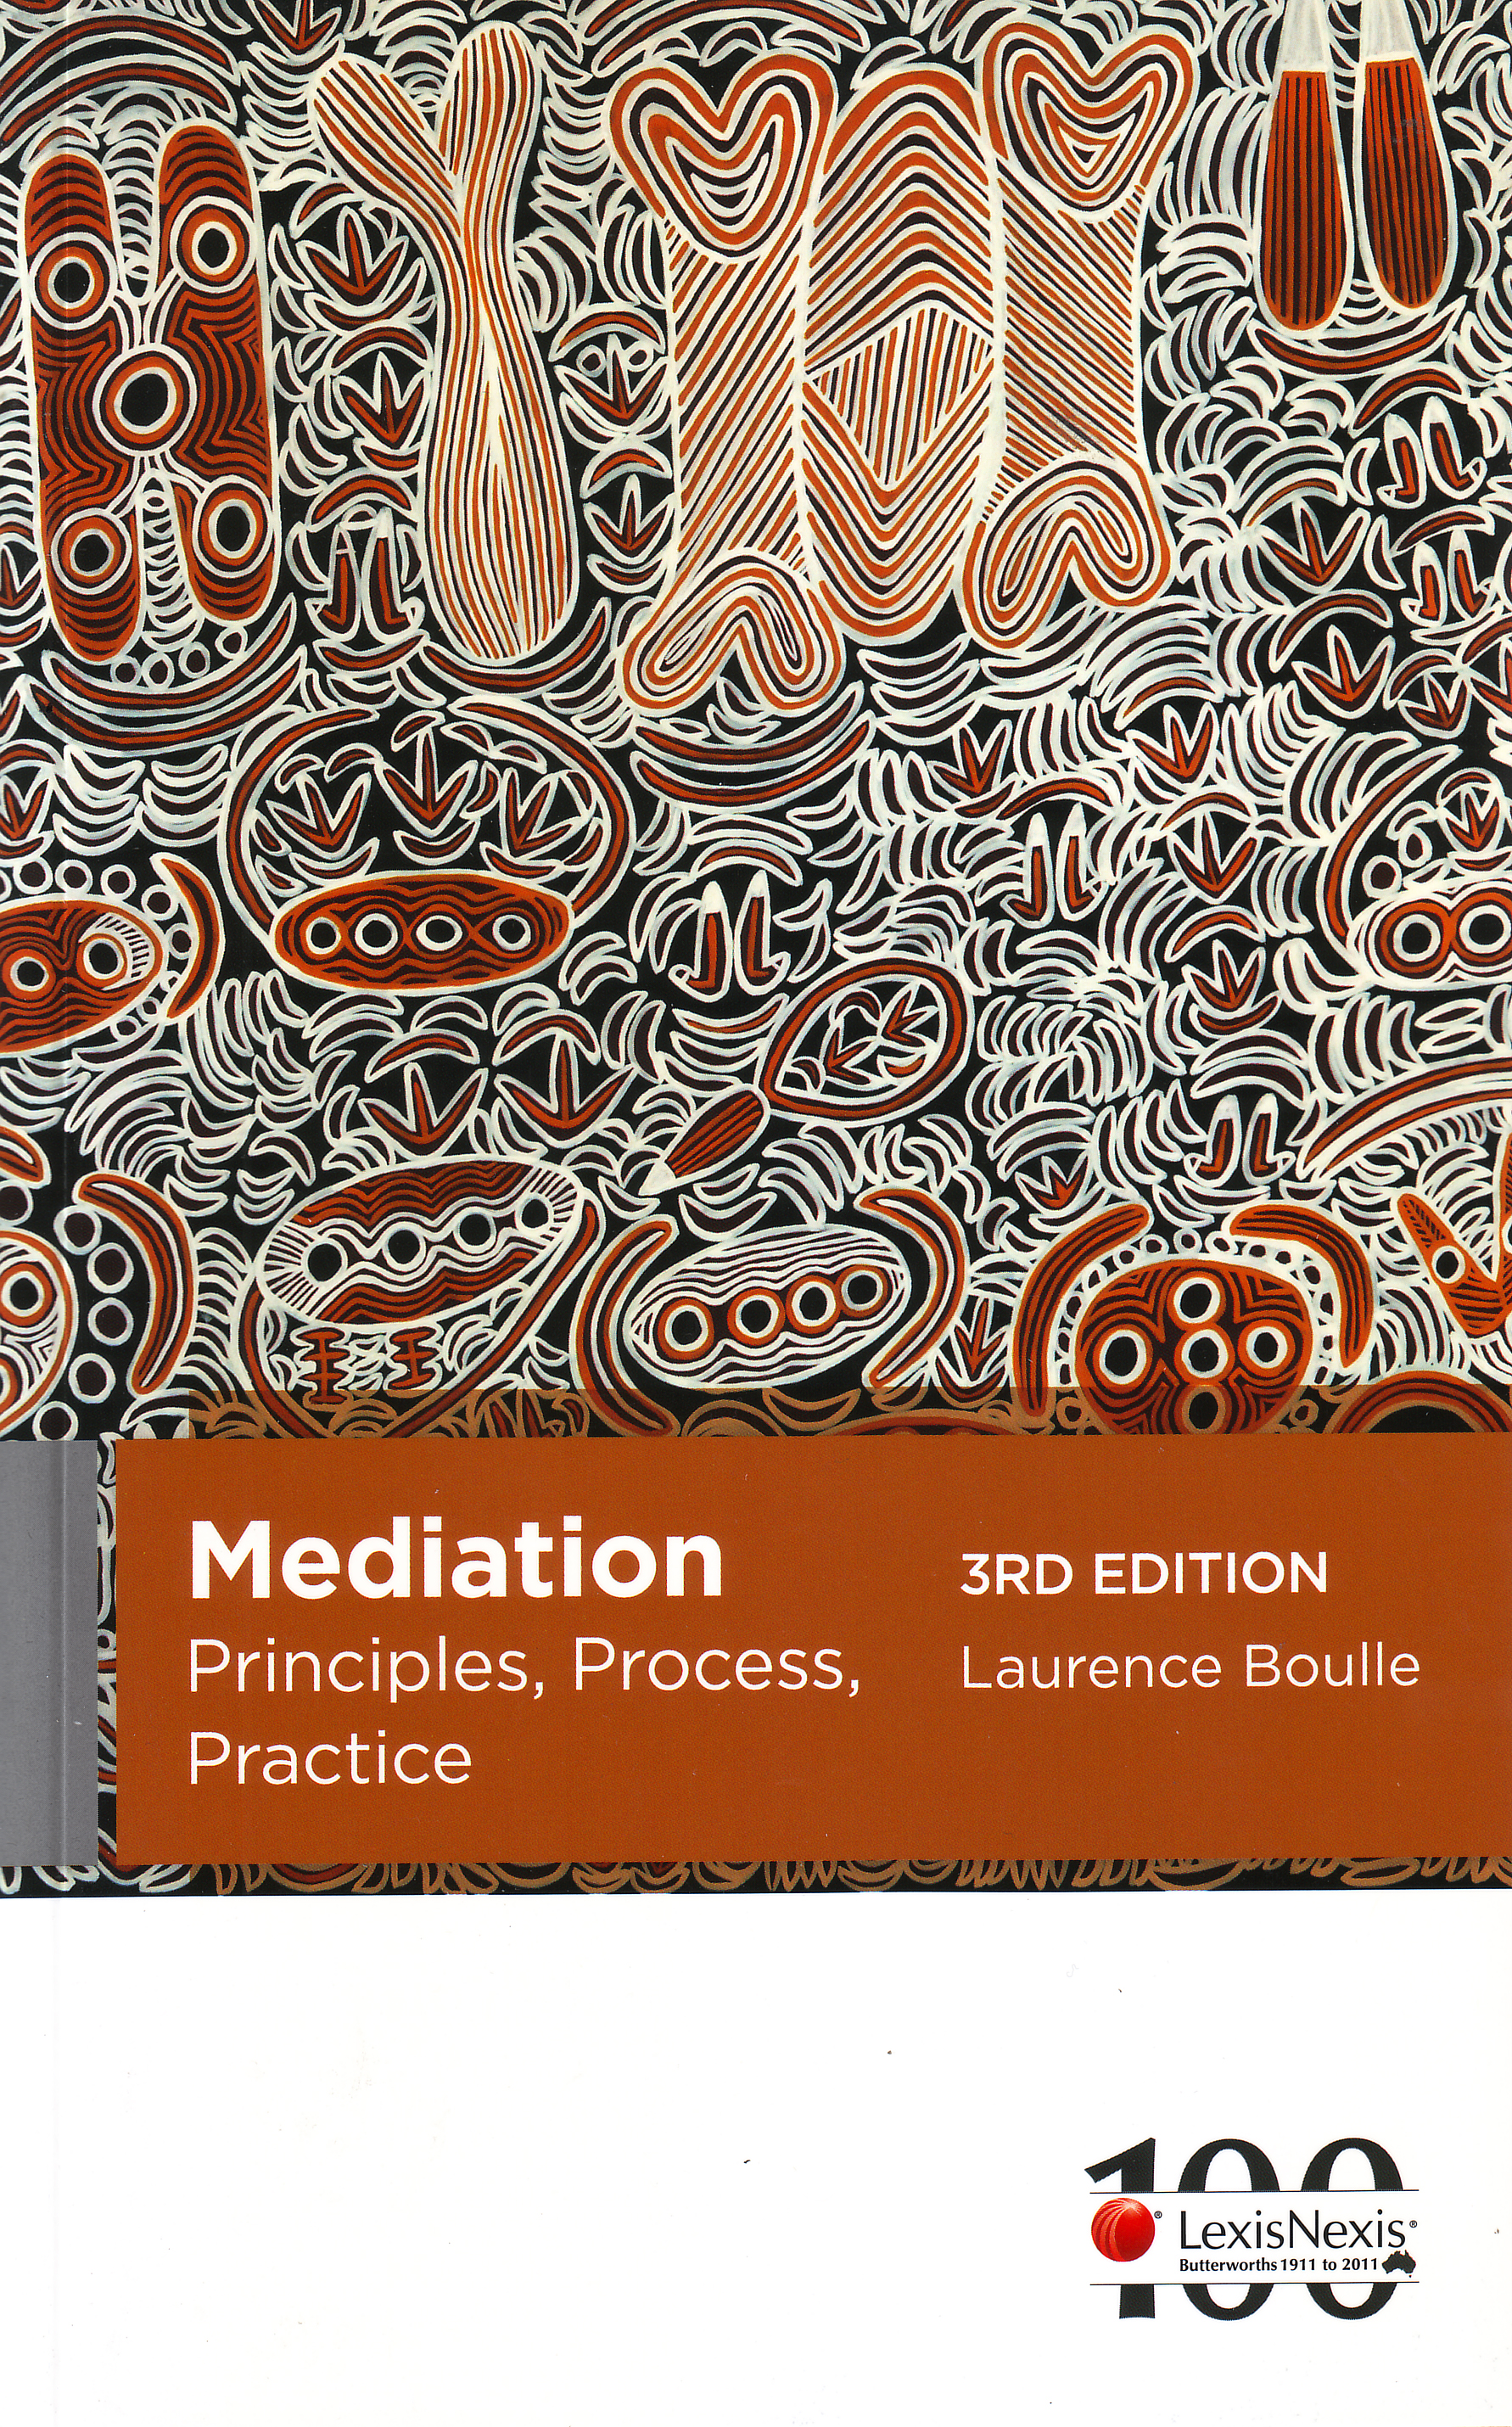 Mediation - Principles, Process, Practice e3